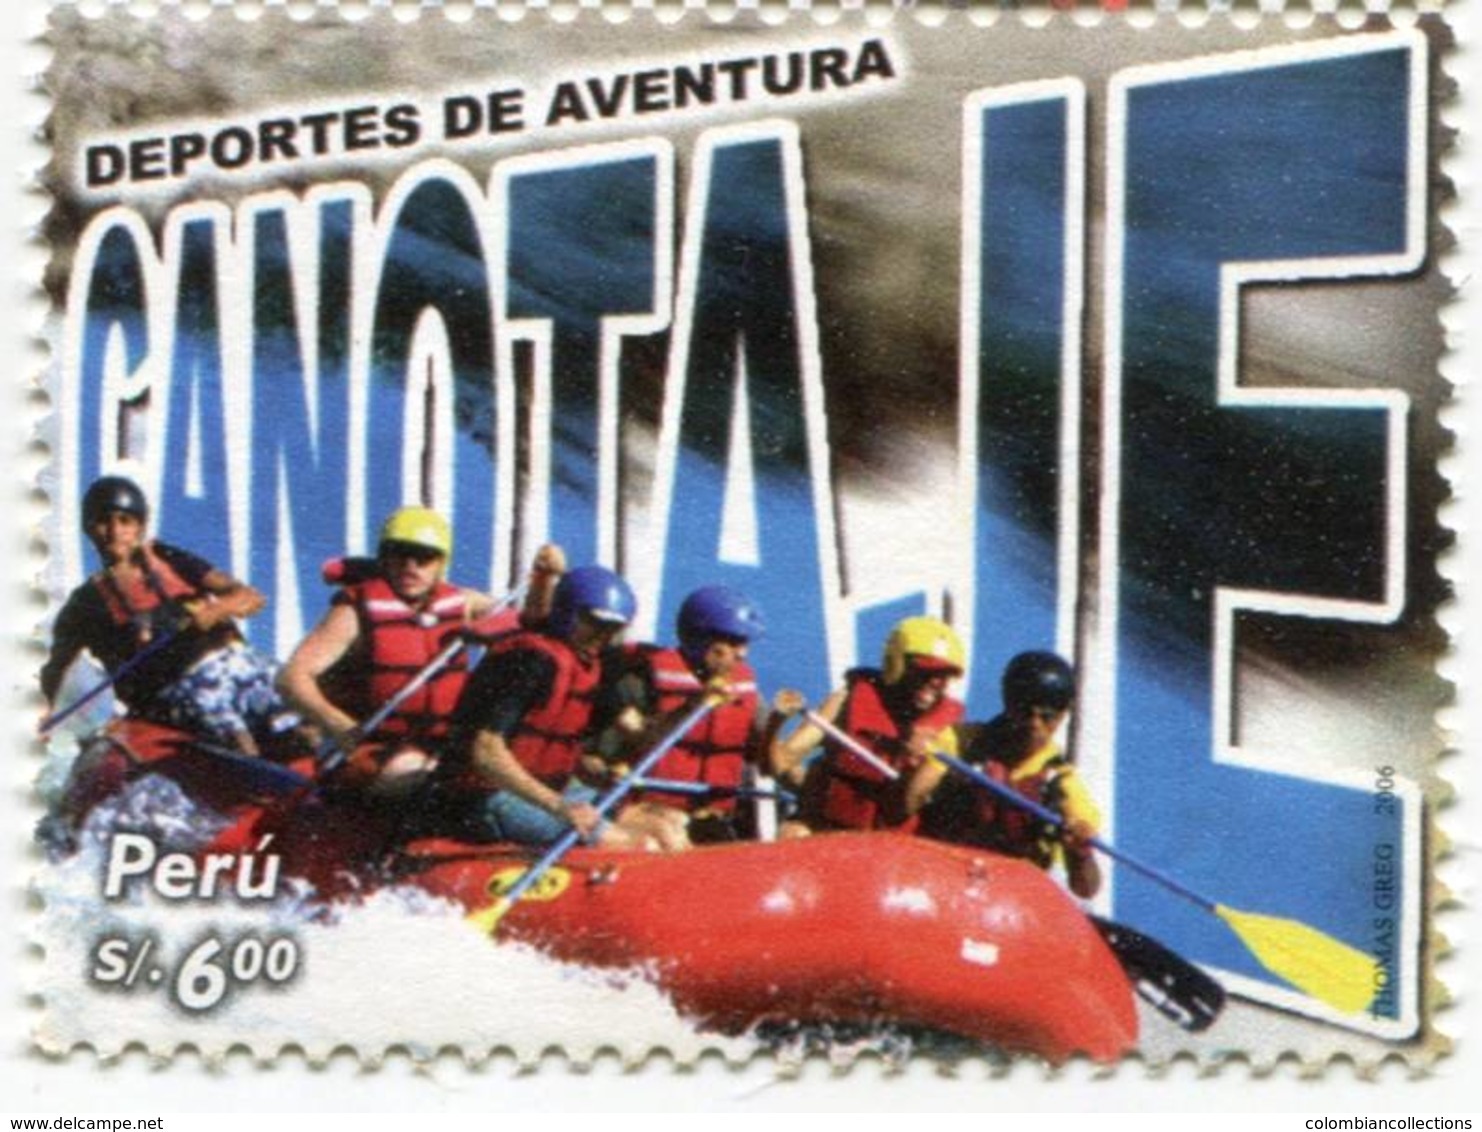 Lote P2006-10, Peru, 2006, Sello, Stamp, Deportes De Aventura, Canotaje, Boating, Extreme Sport - Peru